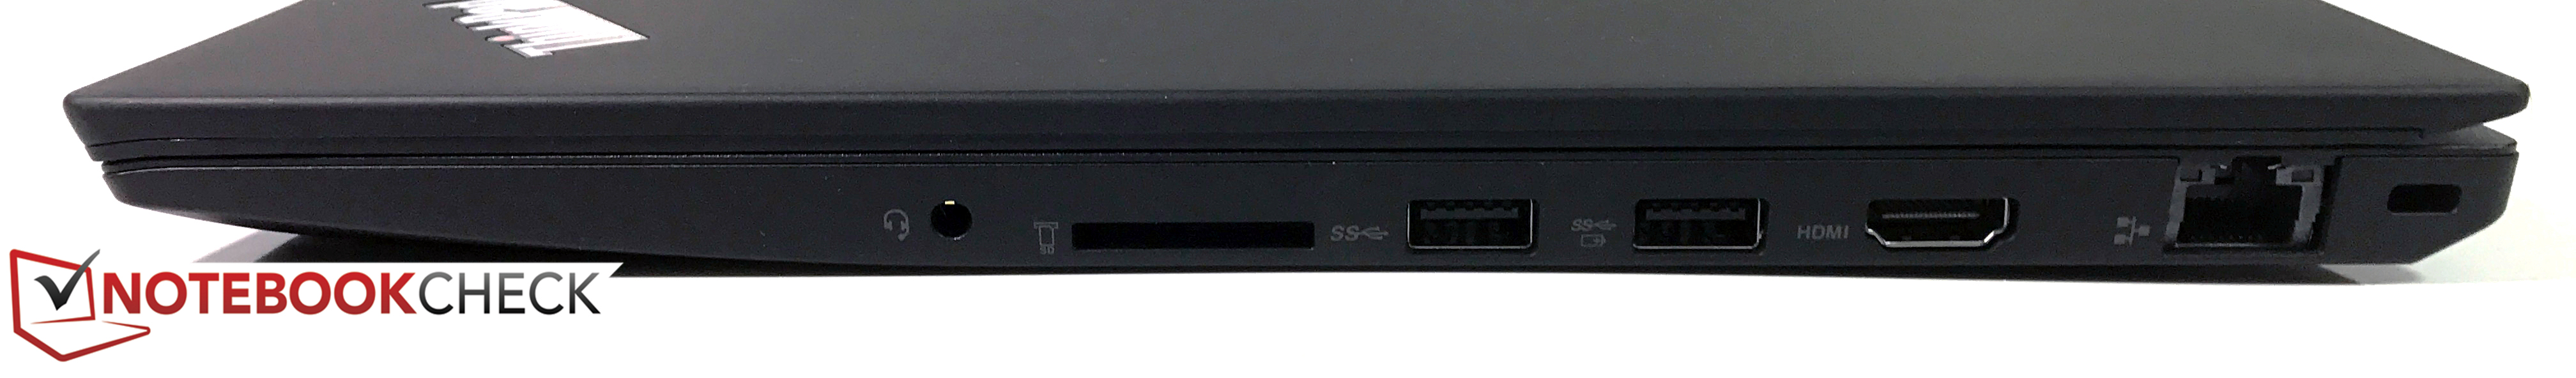 Rechts: 3.5-mm-audio, SD-kaartlezer, 2x USB 3.0 (1x always-on), HDMI 1.4b, RJ45 LAN, Kensington Lock